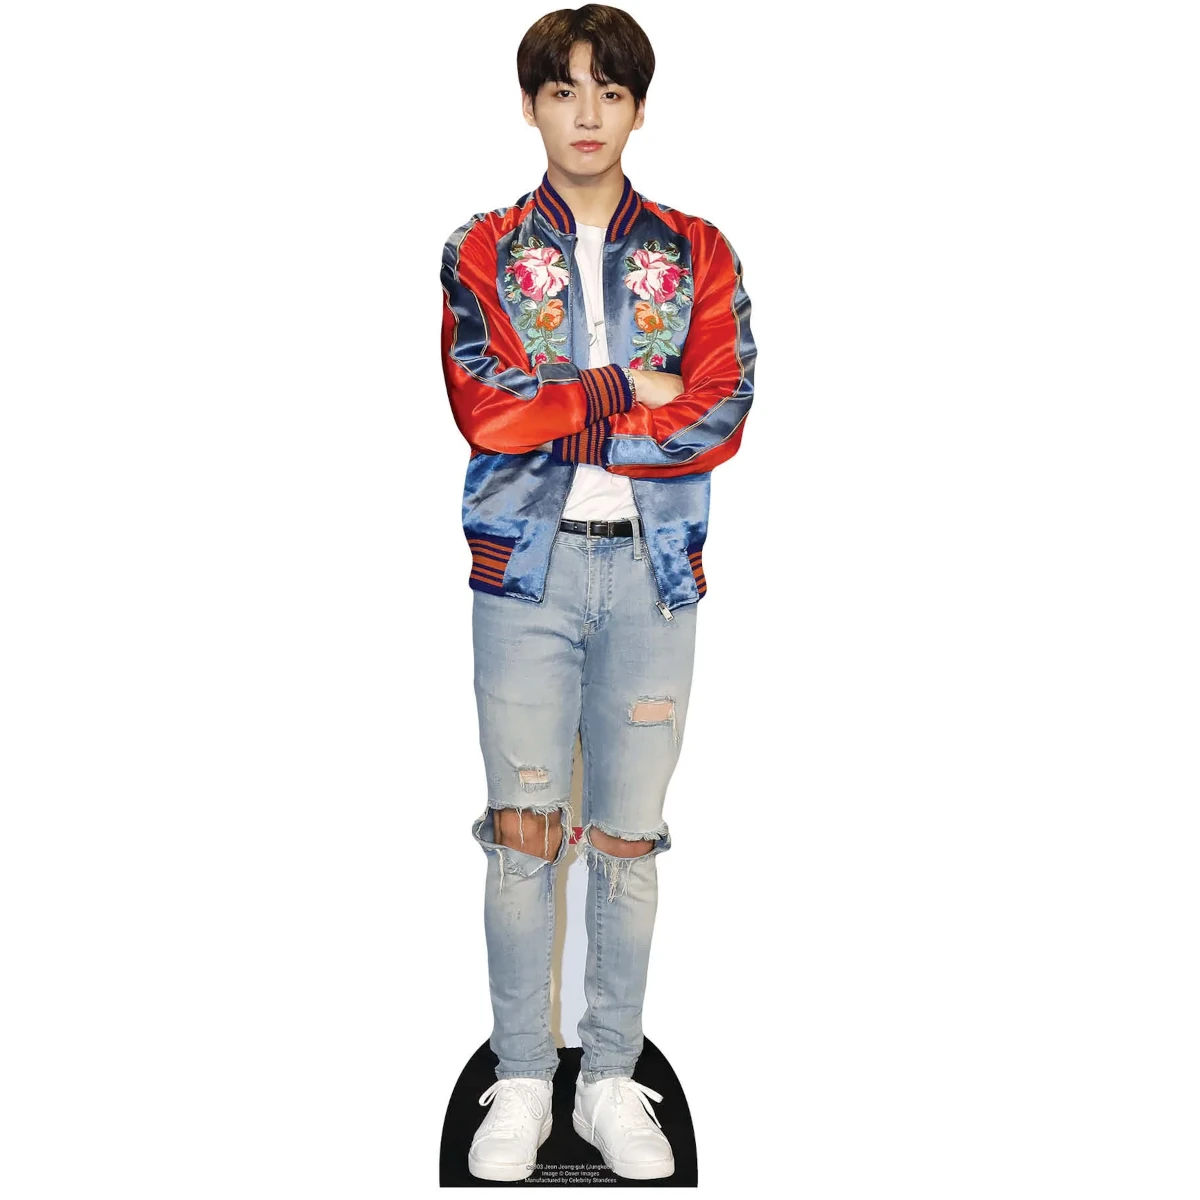 CS903 Jungkook 'Ripped Jeans' (BTS Bangtan Boys) Mini Cardboard Cutout Standee Front